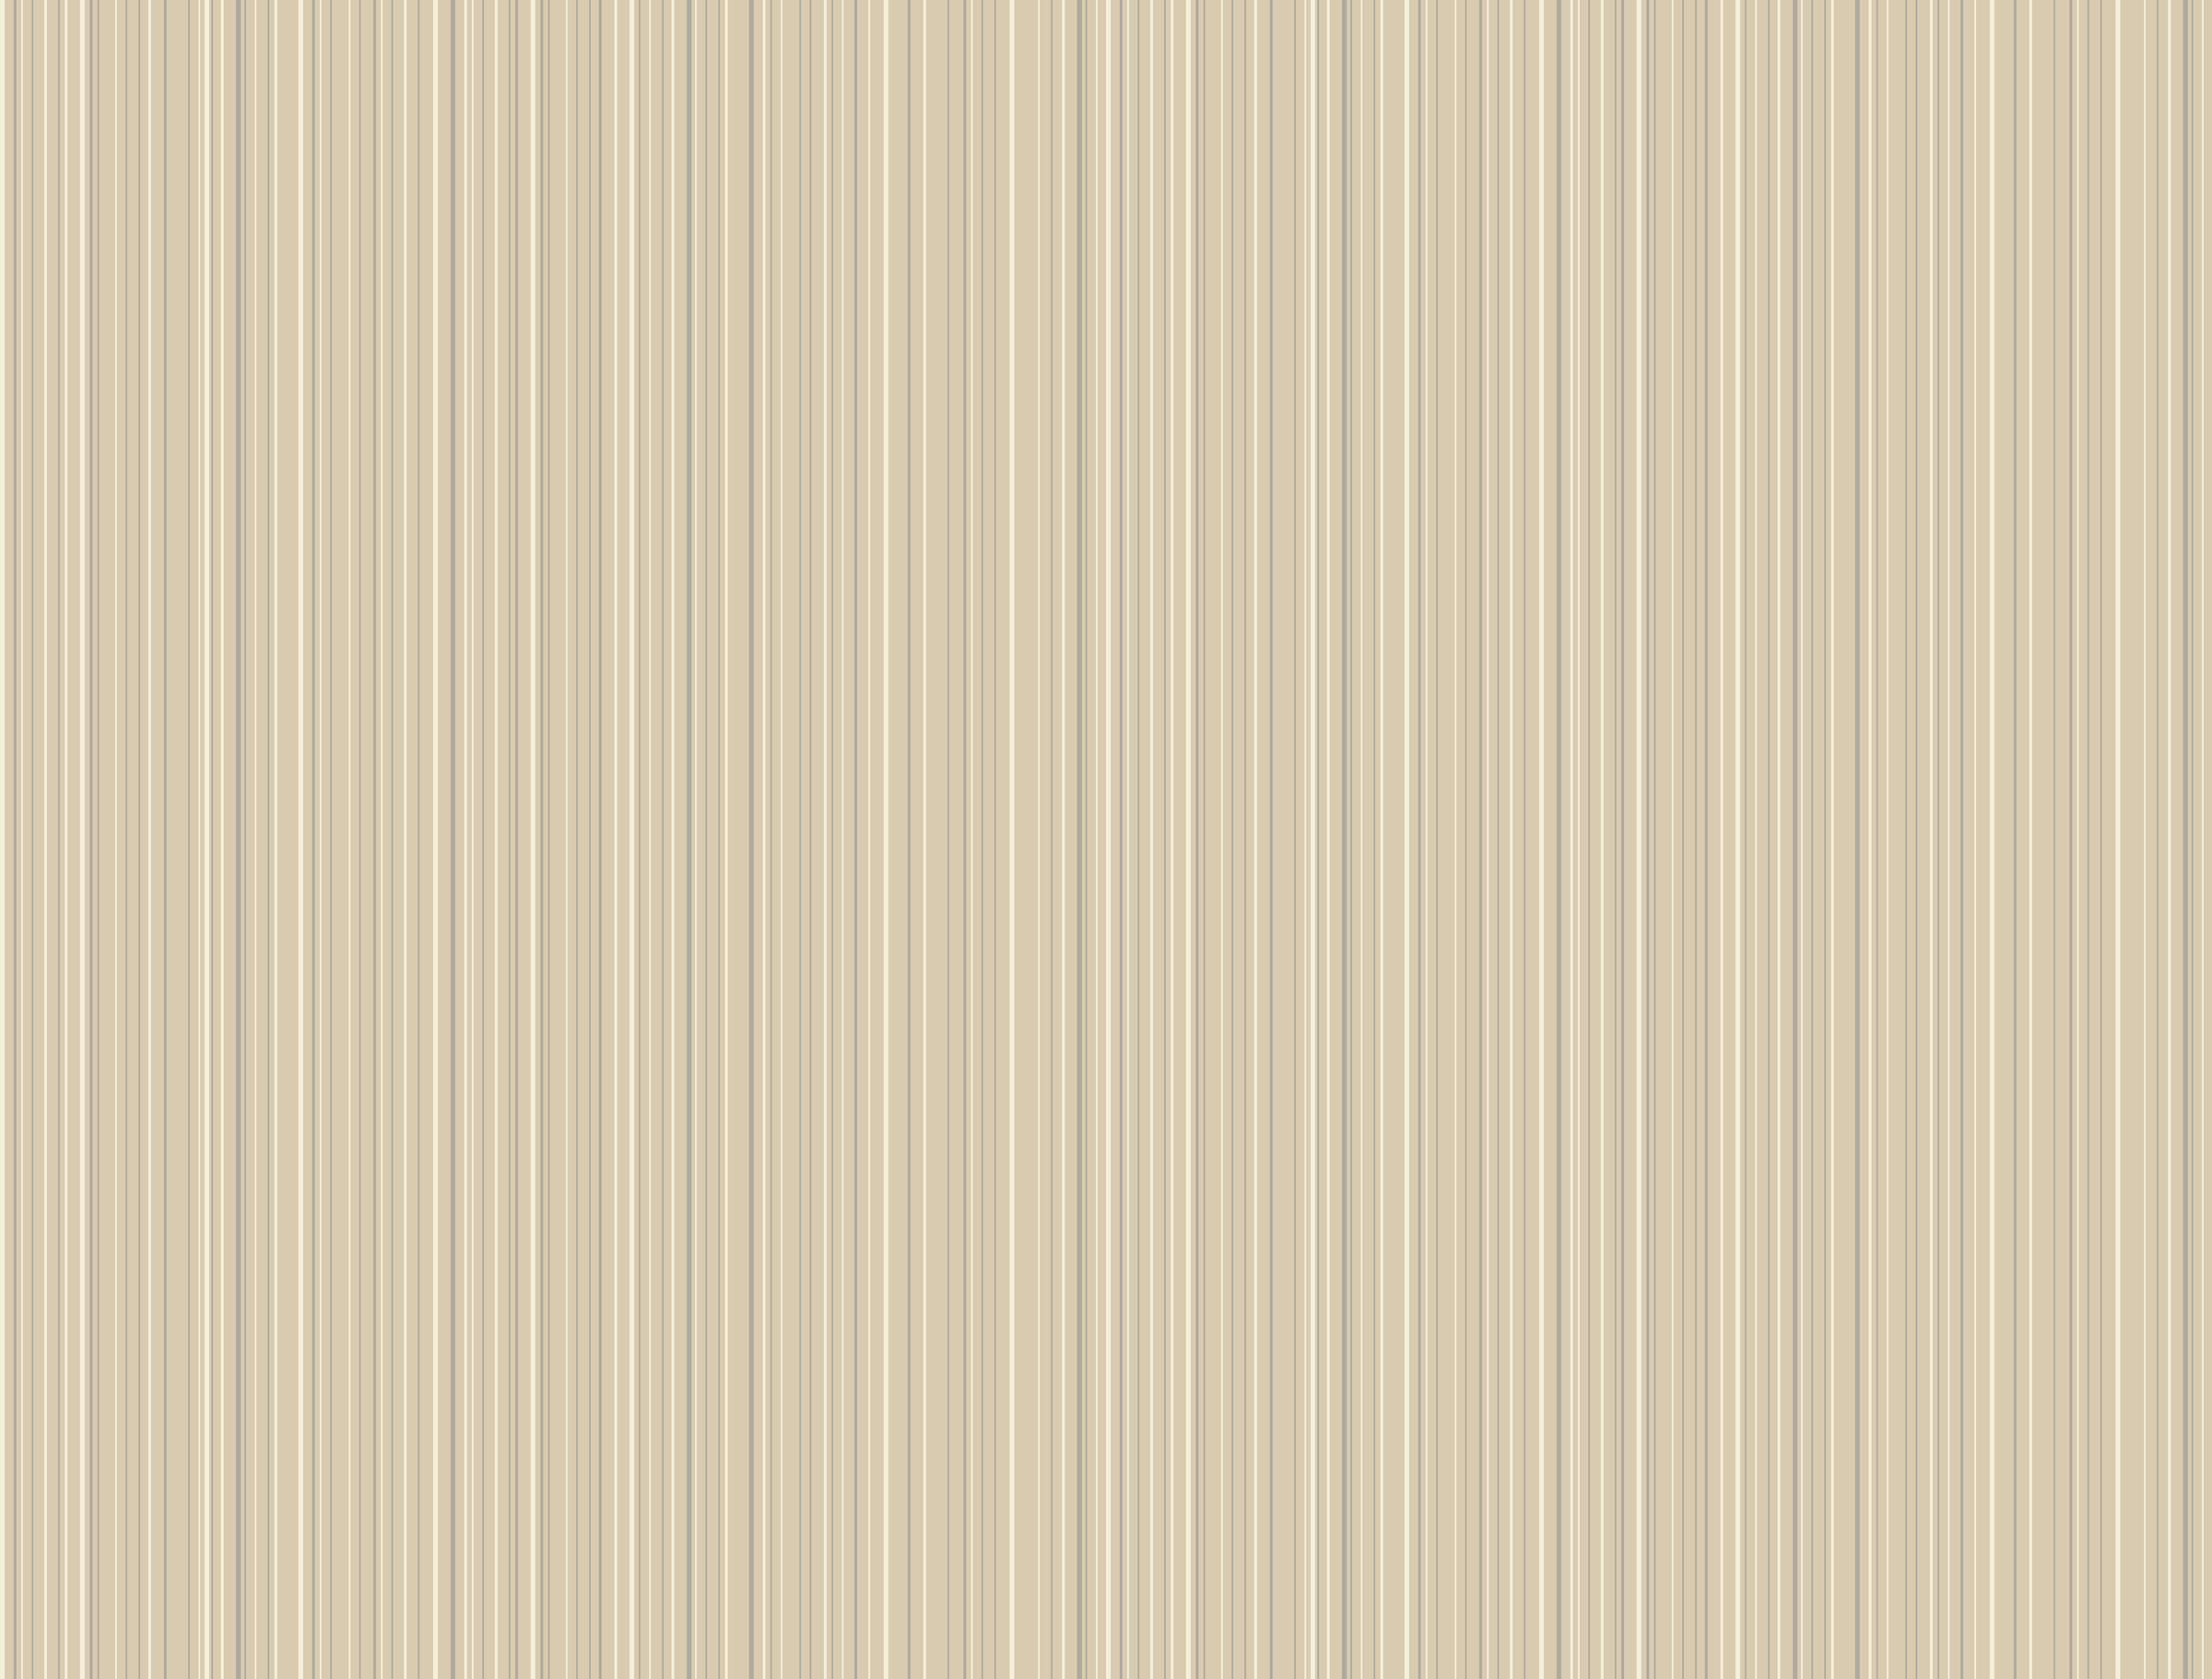 York Wallcoverings Ashford Stripes SA9225 Two Color Stripe Wallpaper, Light Brown / Tan Savvy Decorator